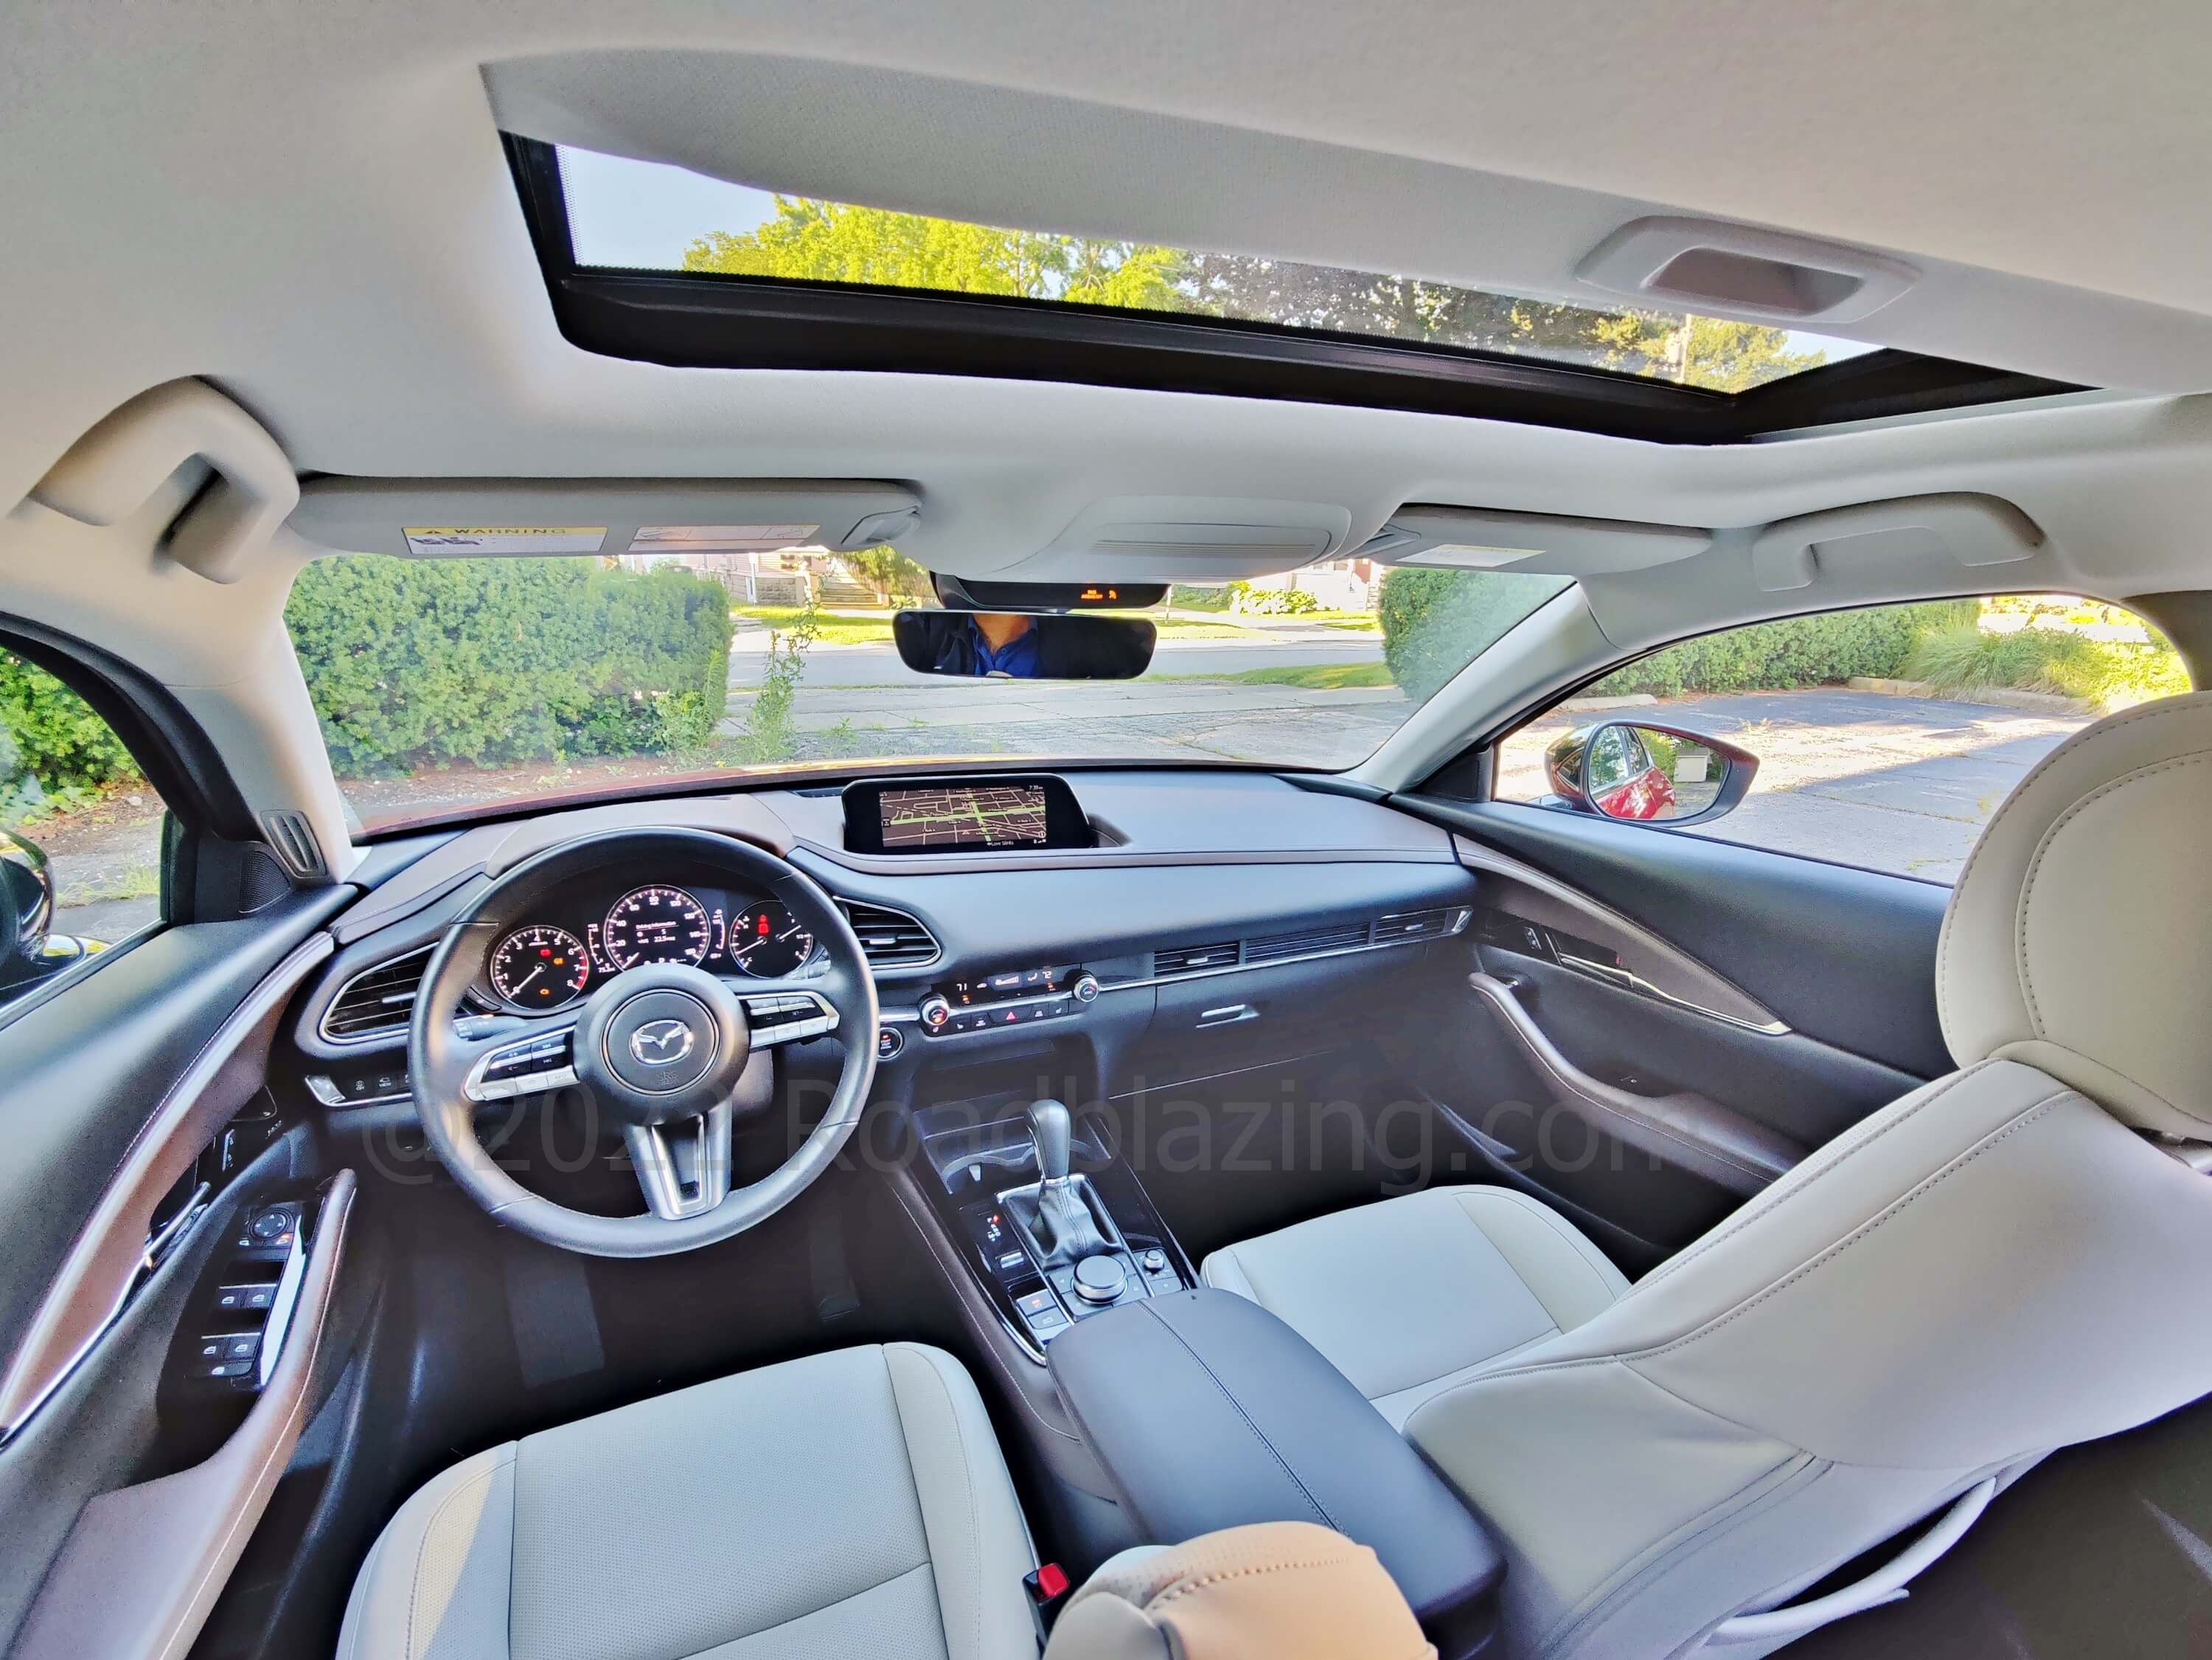 2022 Mazda CX-30 2.5 Turbo AWD: parchment cabin evokes entry luxury sensation